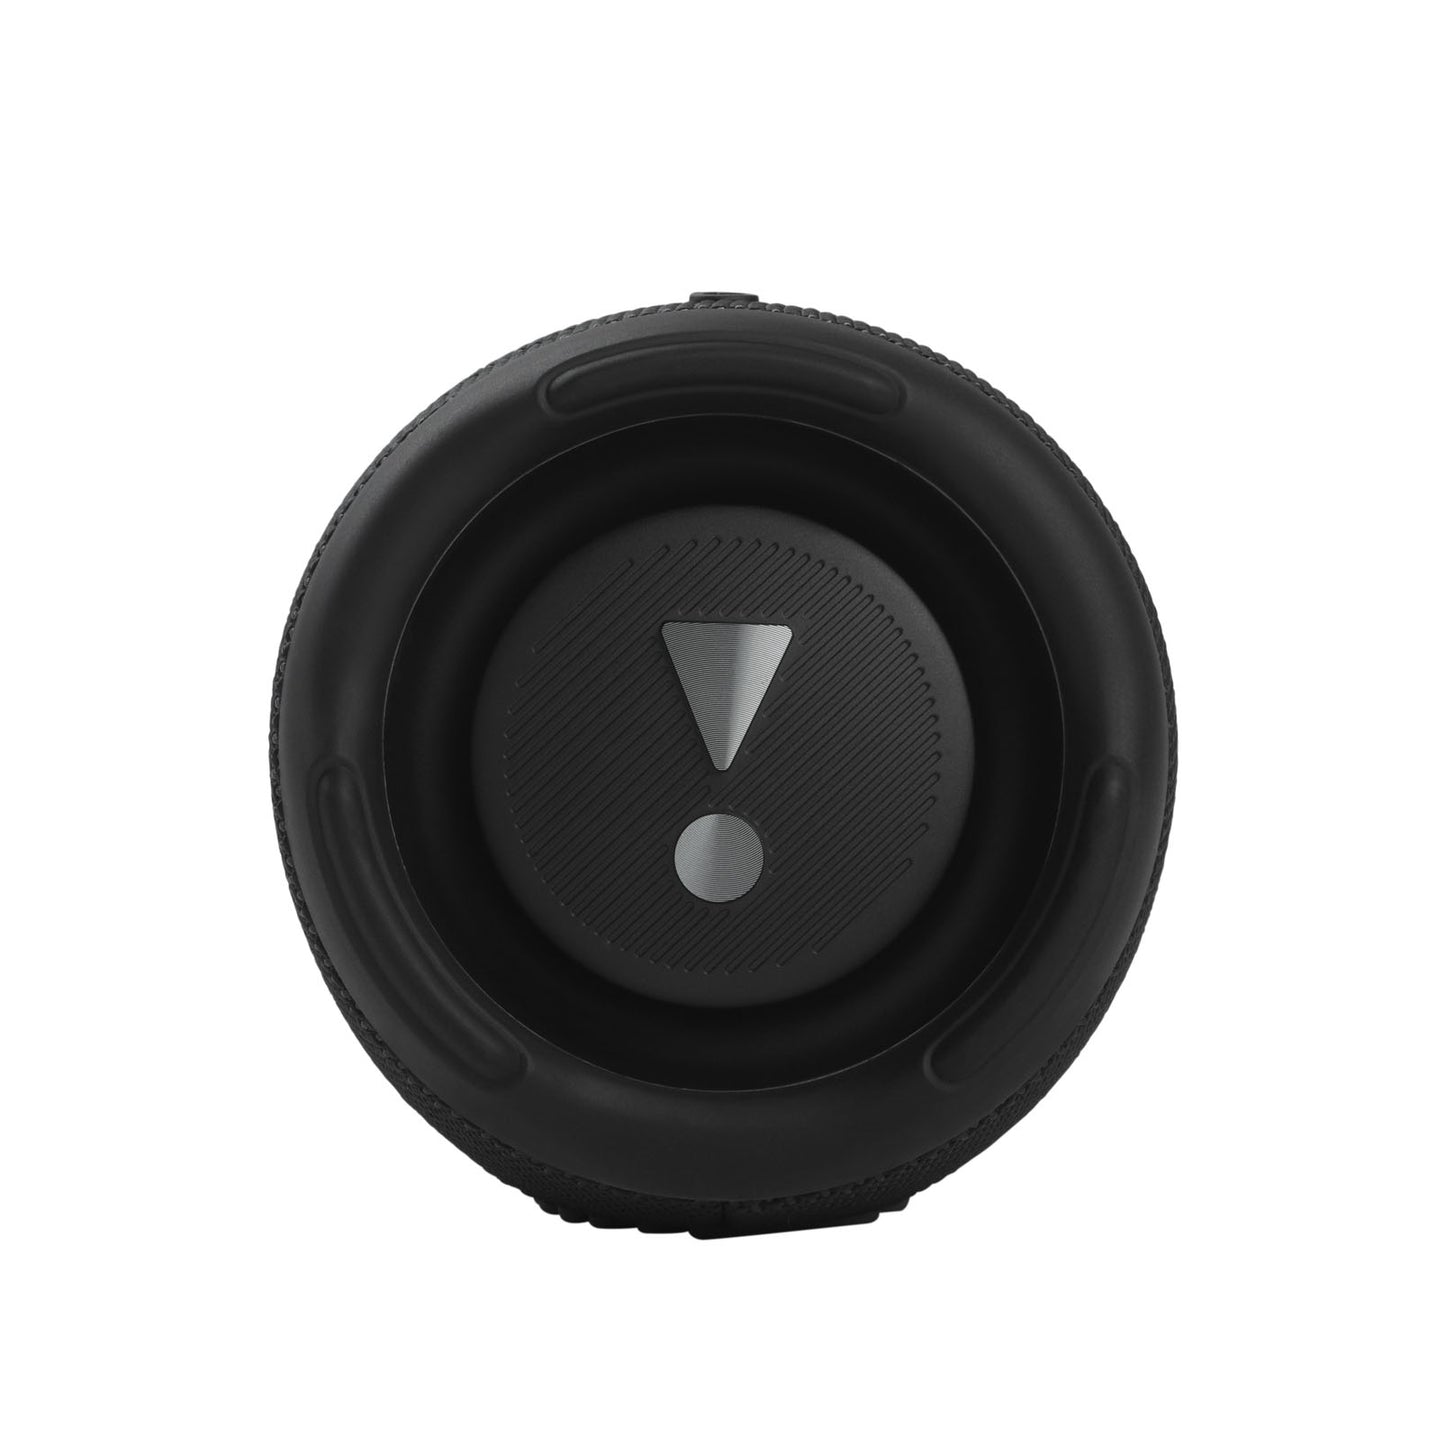 JBL Charge 5 Portable Bluetooth Speaker - Black